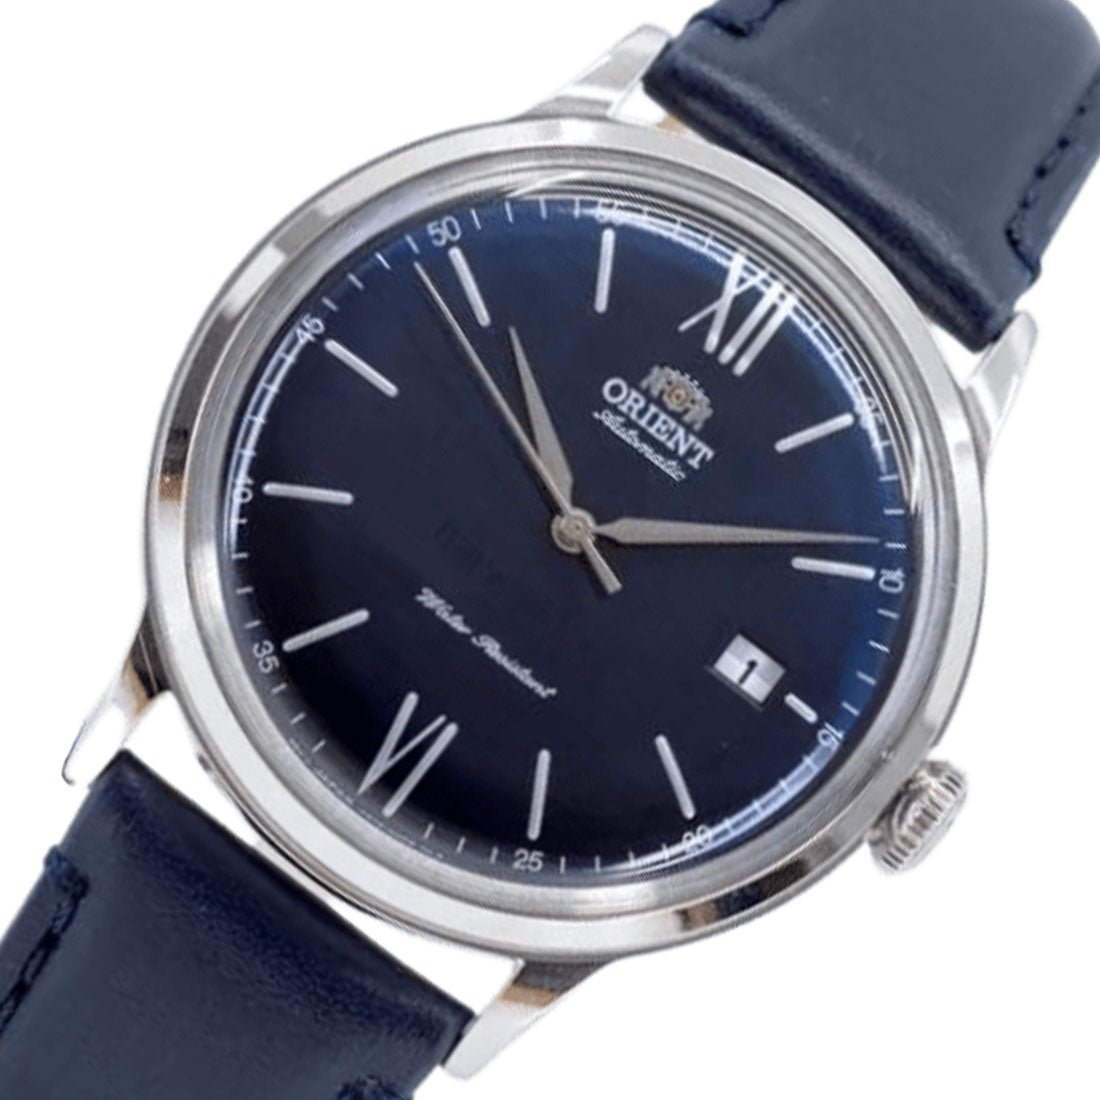 Orient Bambino Classic Automatic RA-AC0021L10B RA-AC0021L Blue Leather Watch -Orient